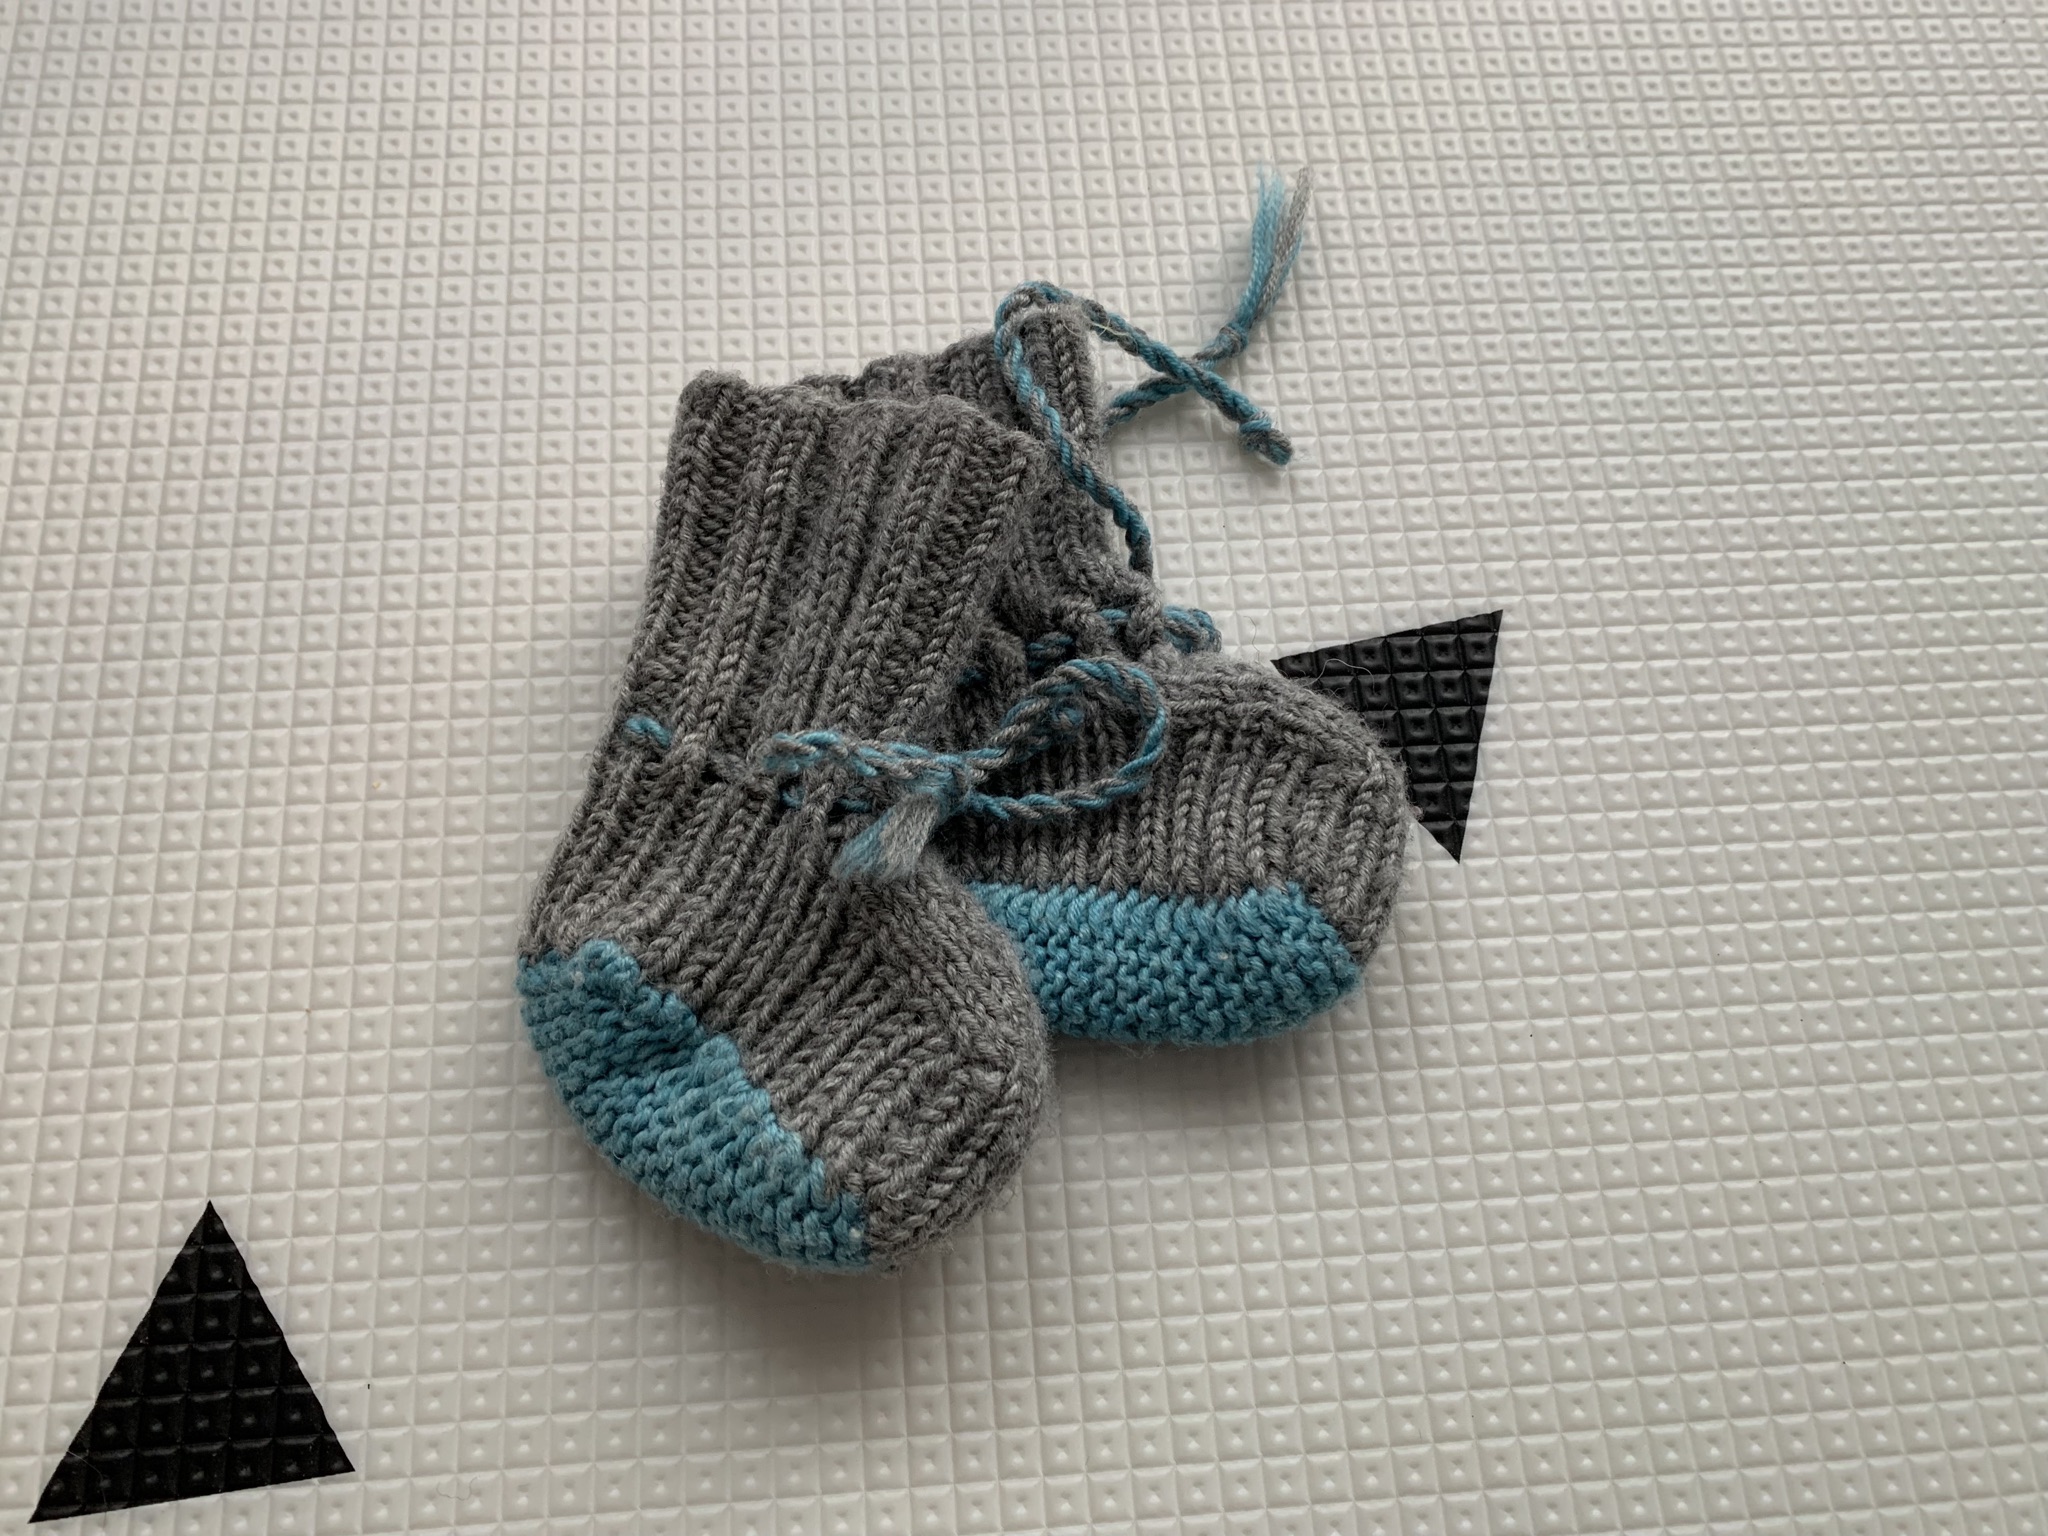 Display of wonderful blue and grey knit socks